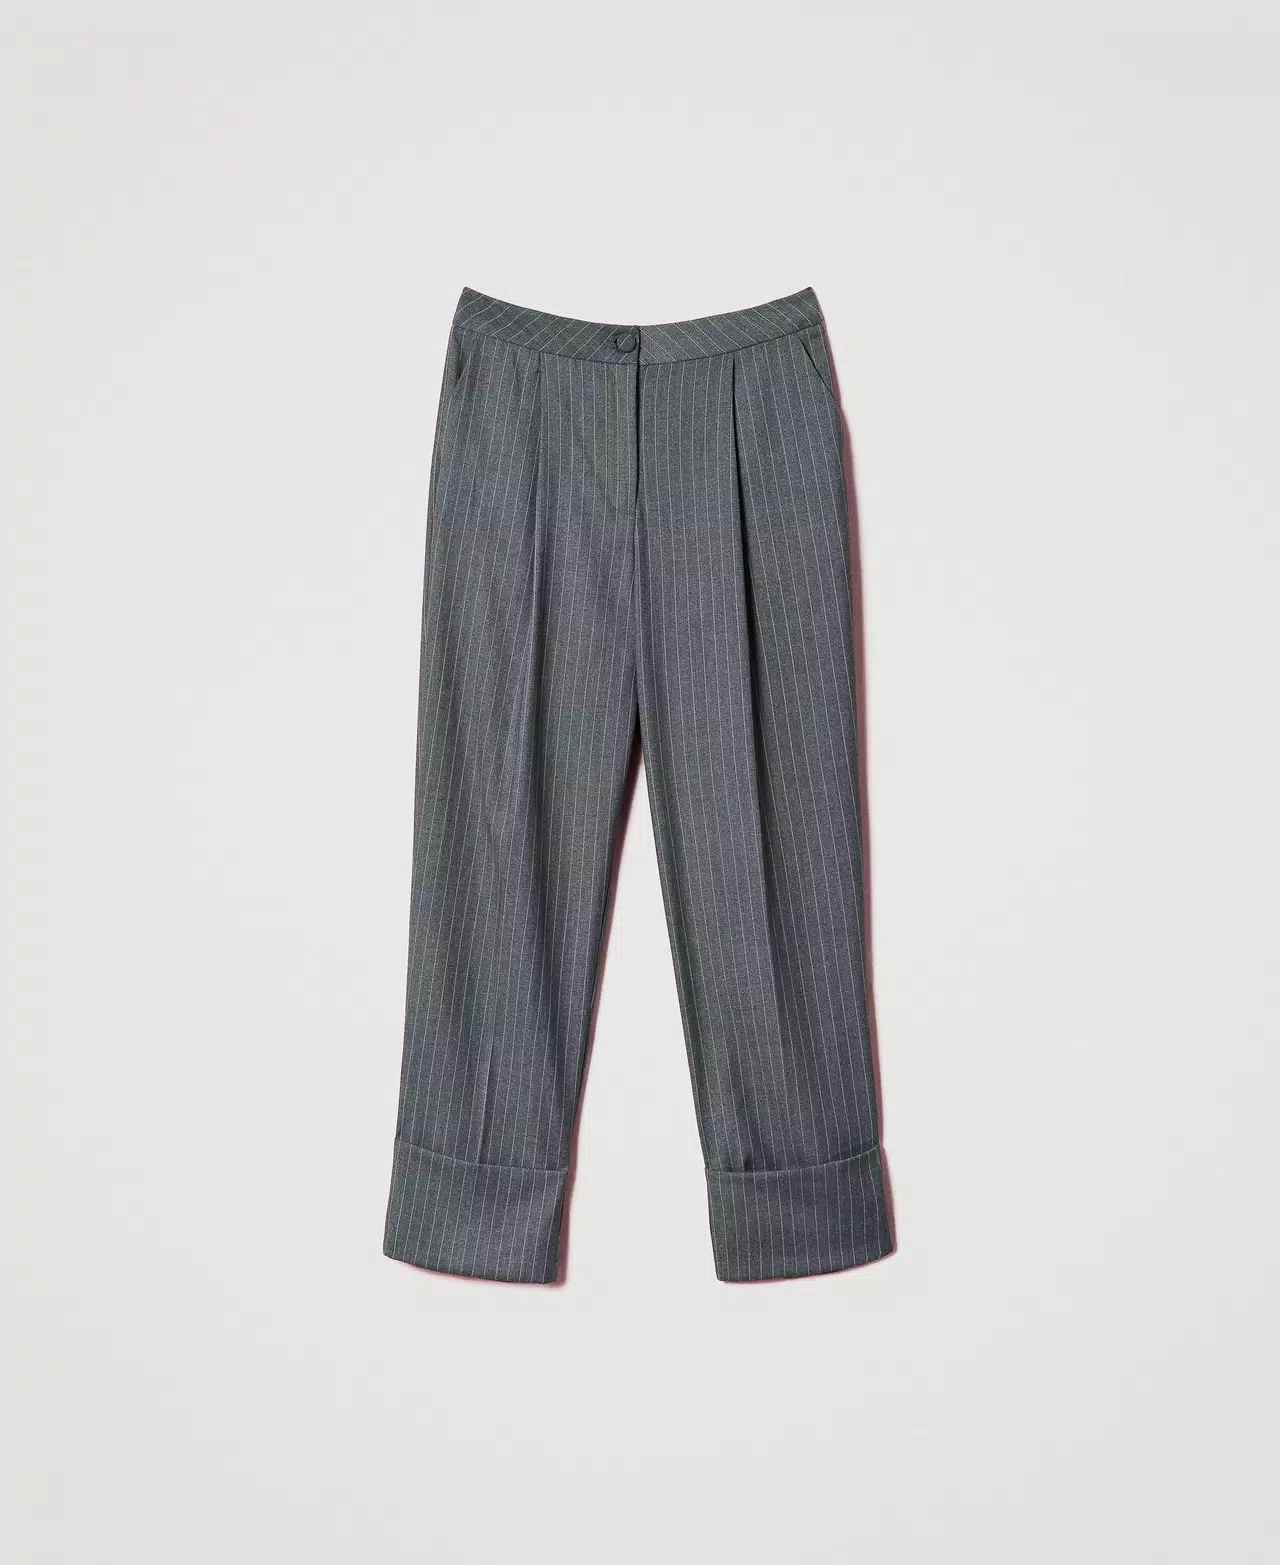 Pinstripe trousers